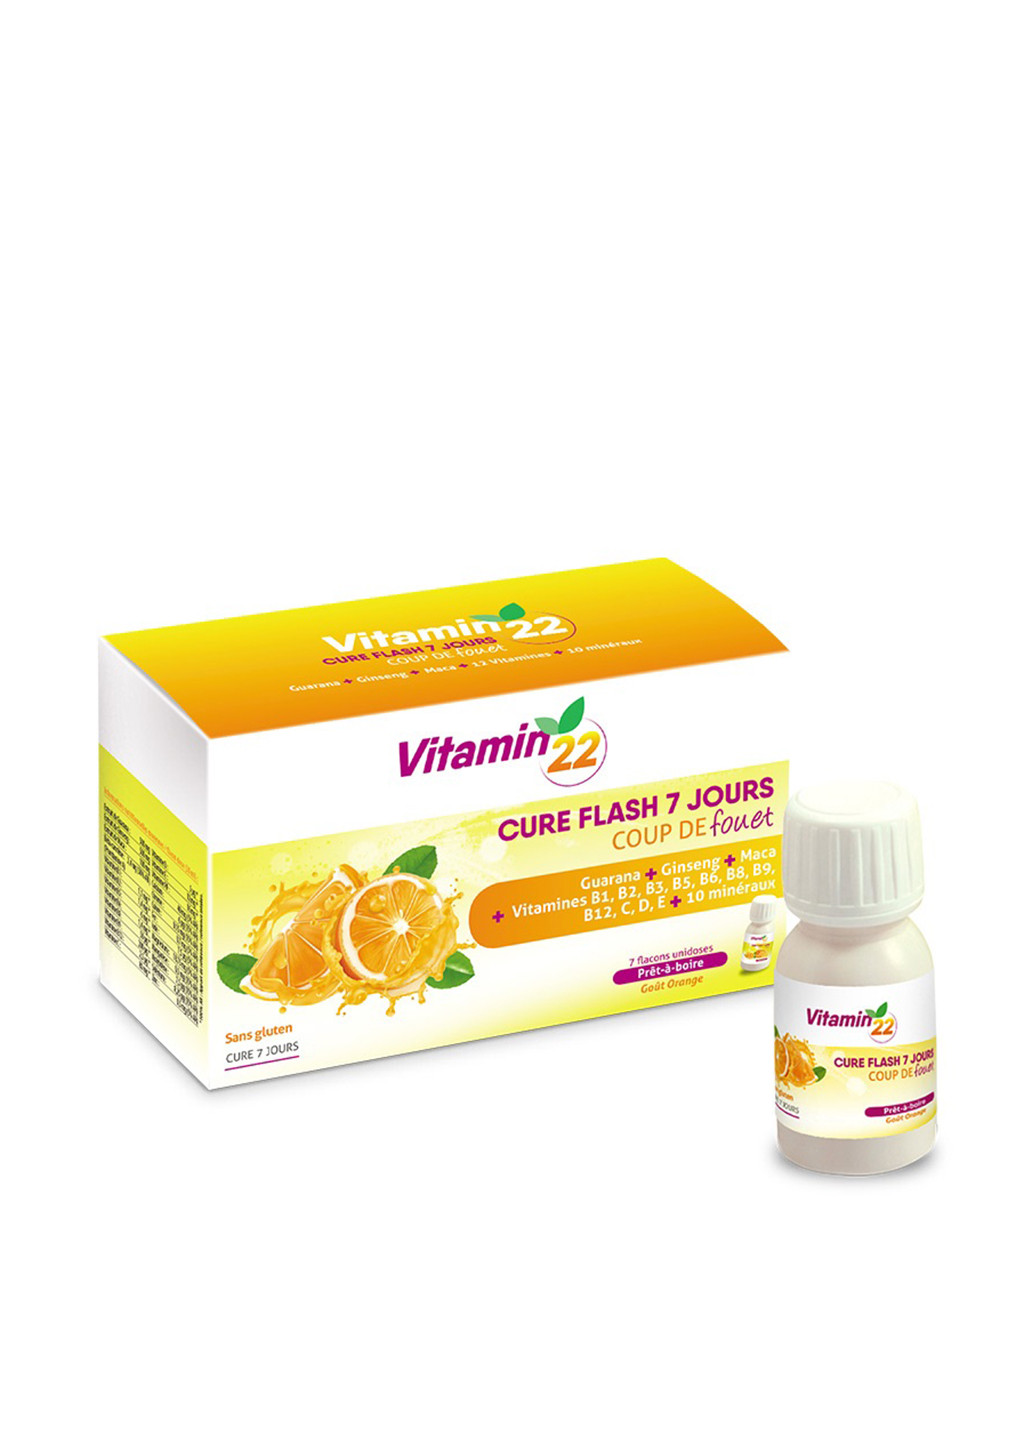 VITAMIN’22 КУРС БЛИСКАВКА 7 ДНІВ / CURE FLASH 7 JOURS, 7 флаконів-доз Vitamin'22 (17020495)